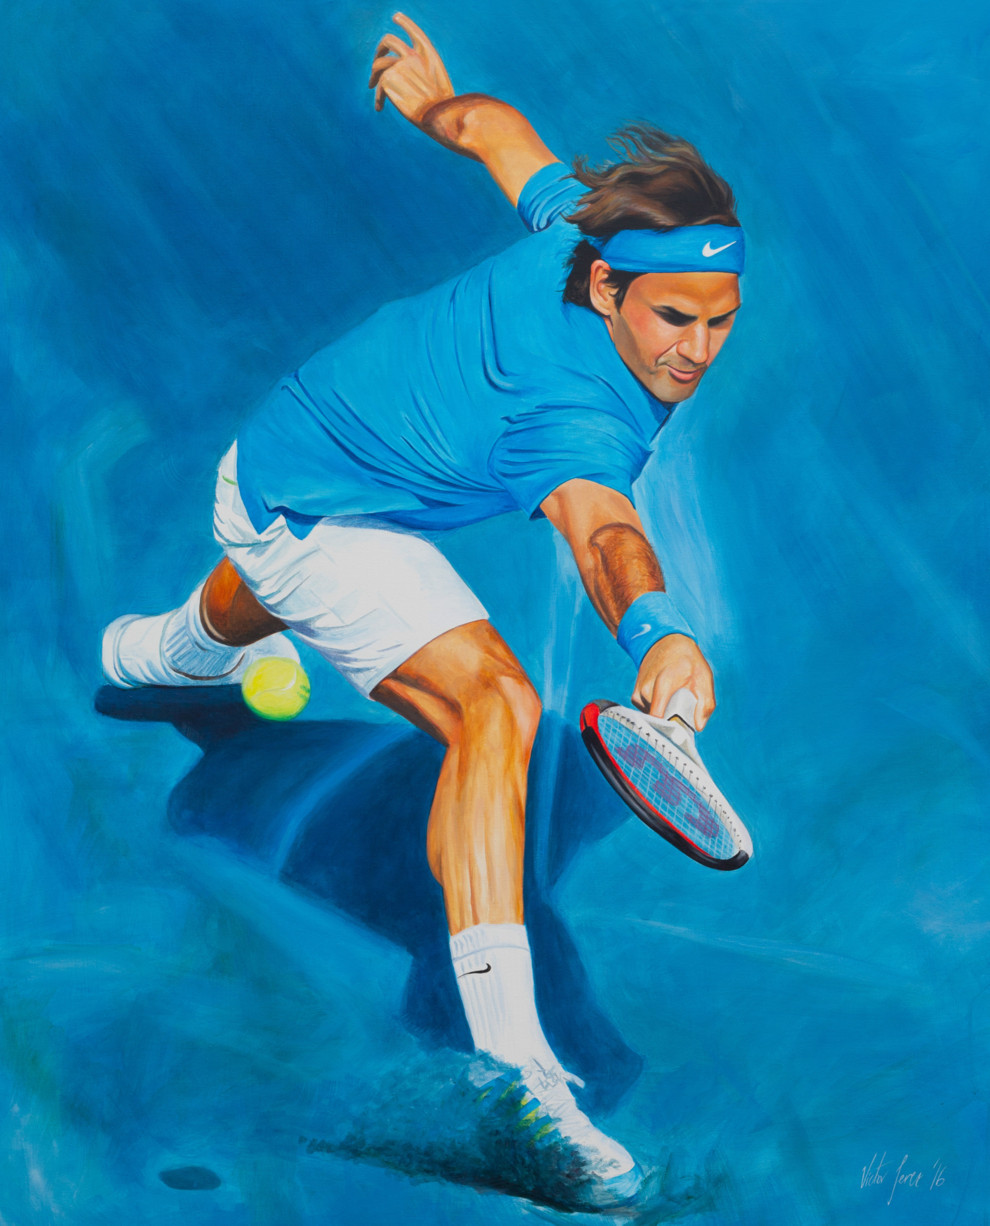 Roger Federer, sobre la tierra azul